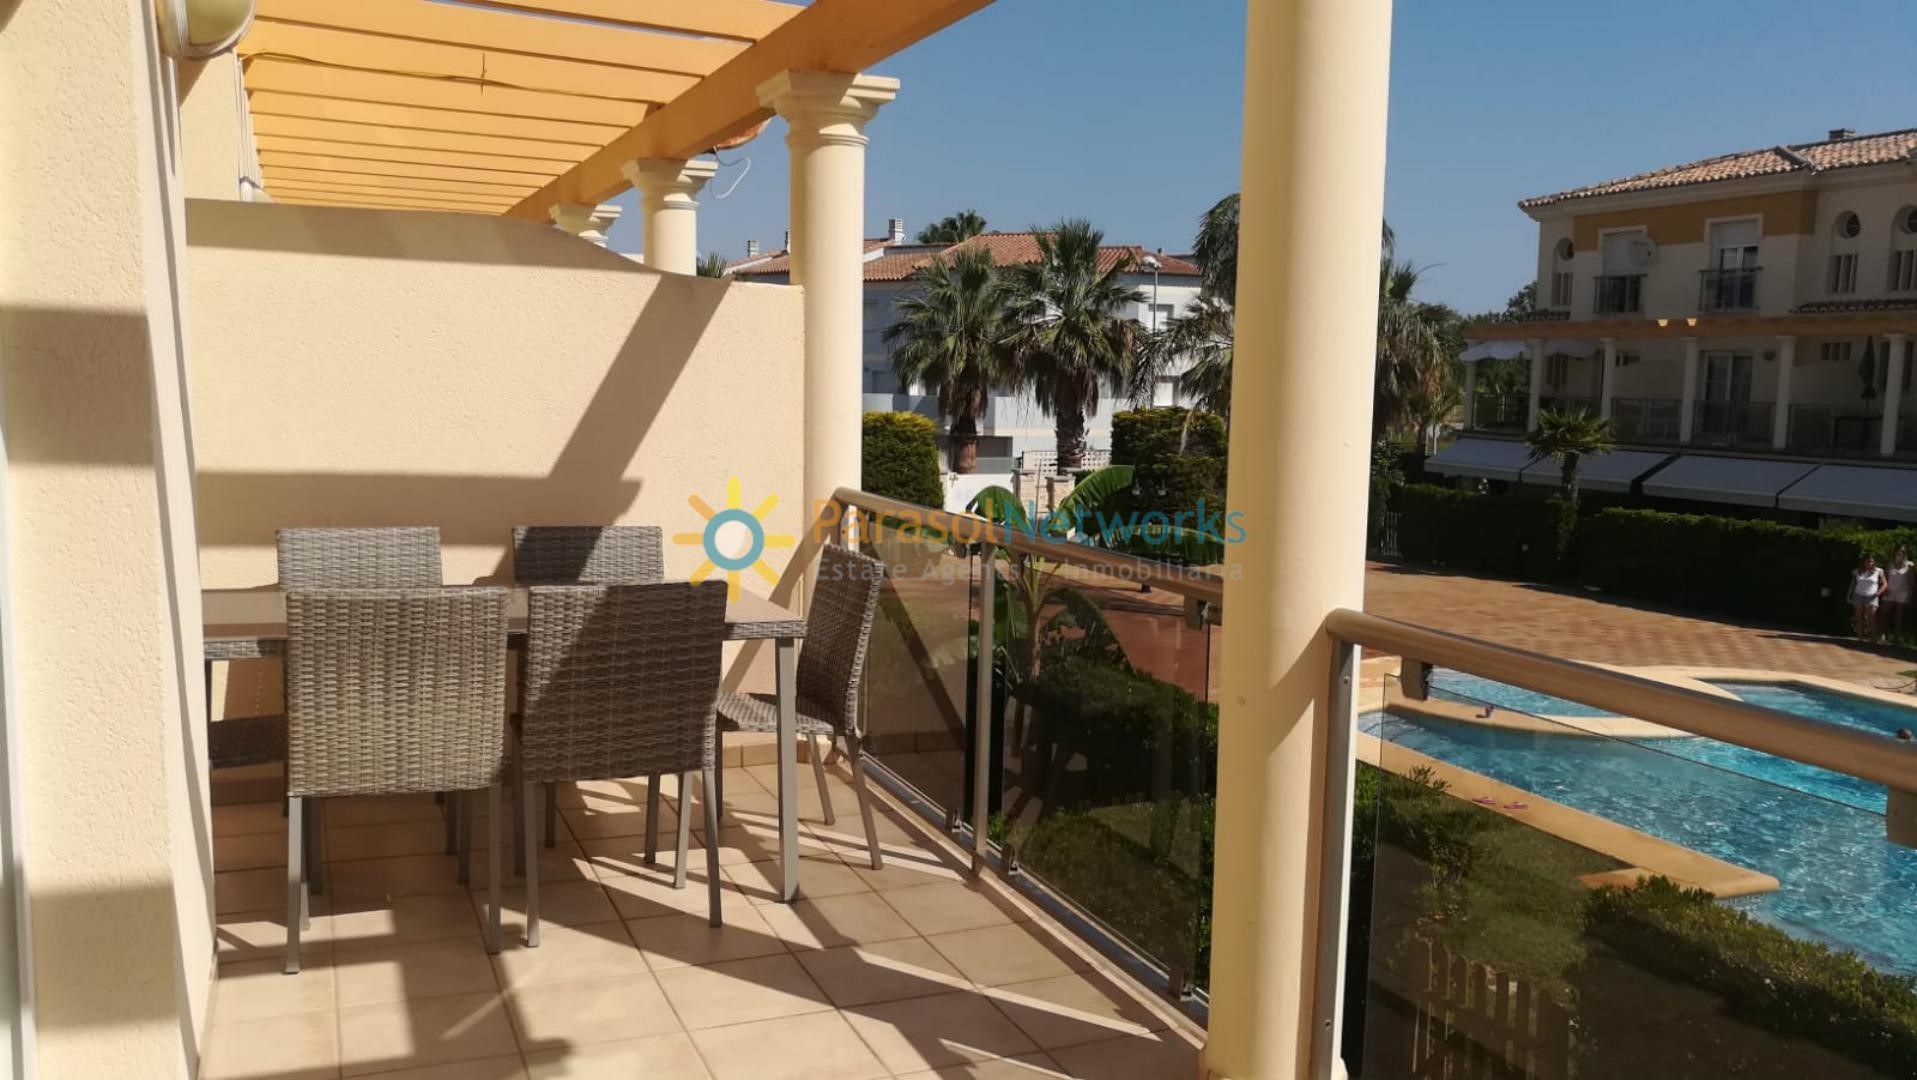 Duplex for rent in Oliva beach – Ref: 261